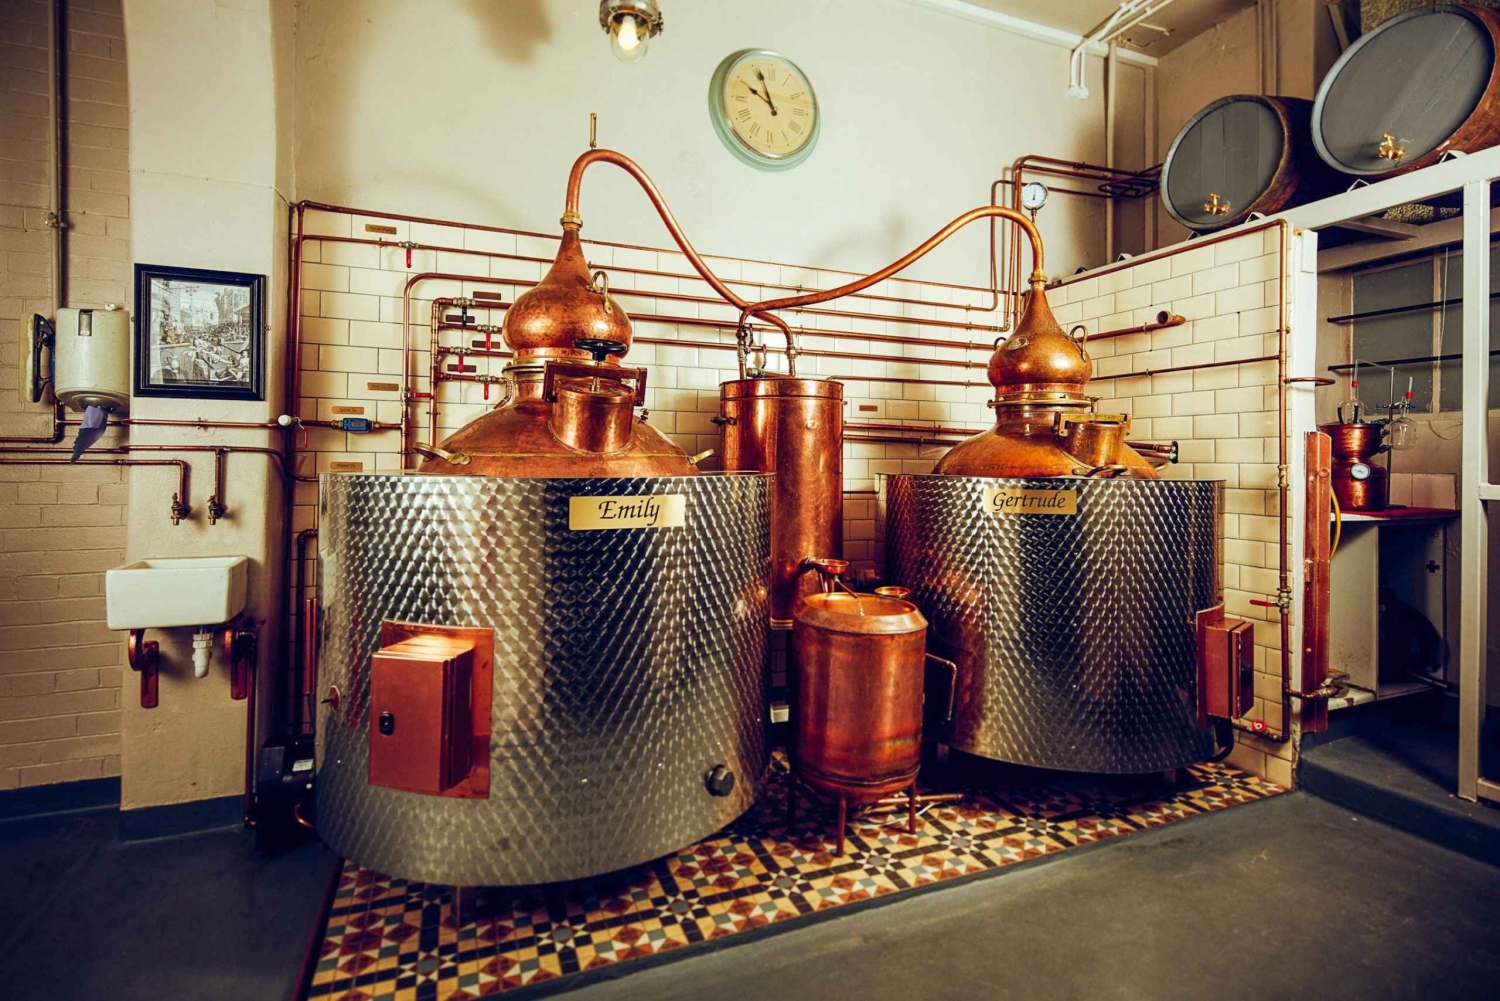 Edinburgh: Pickering's Gin Jolly Distillery Tasting Tour